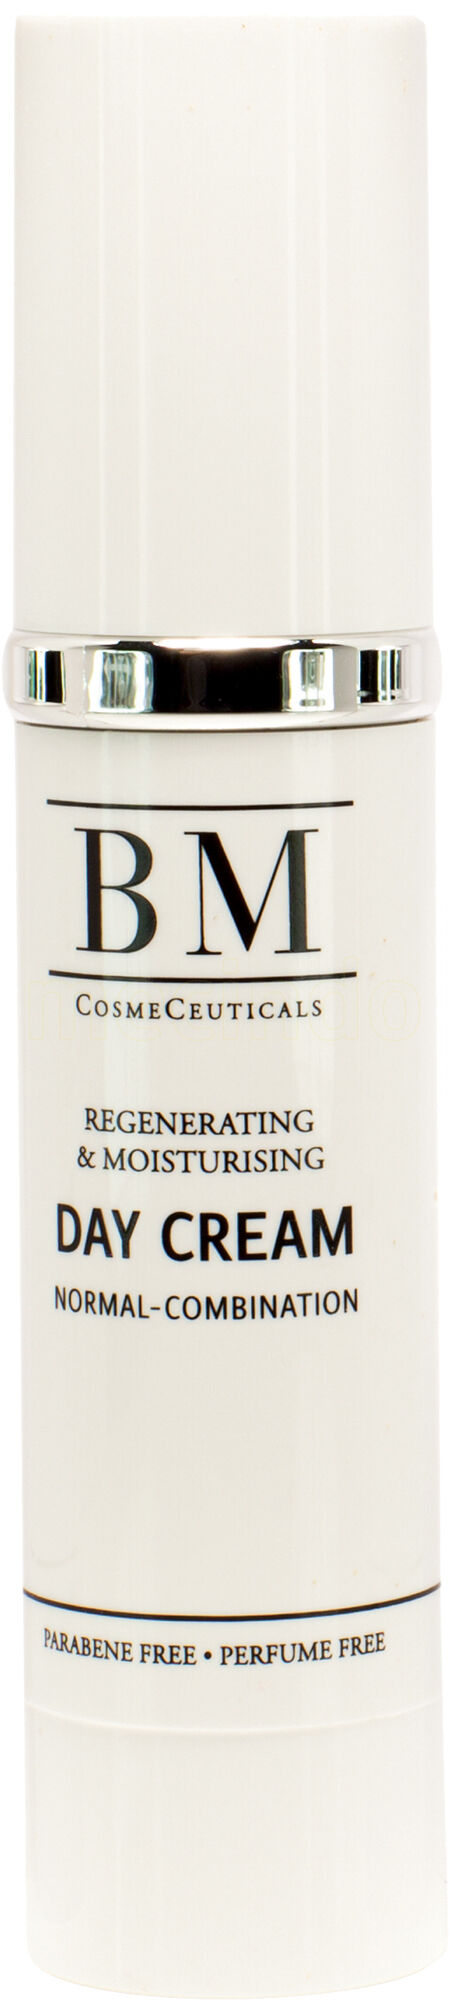 Bm Regenerative Day Cream - 50 ml